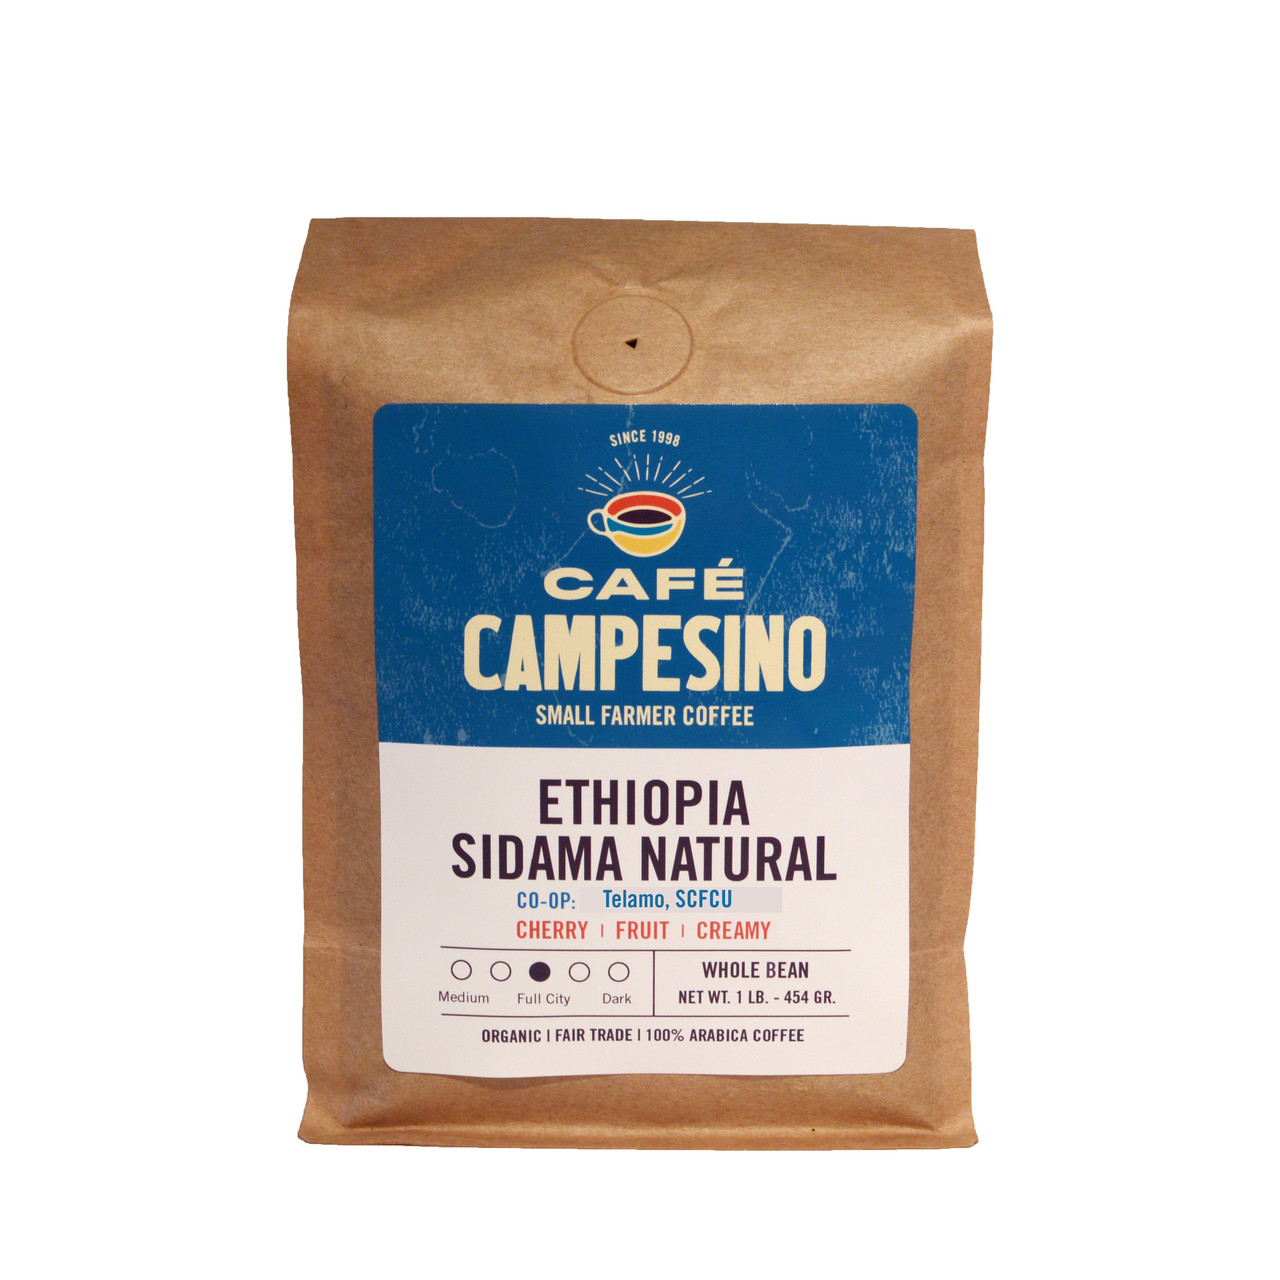 Café Ethiopie Sidamo Pur Arabica Bio Équitable - Destination